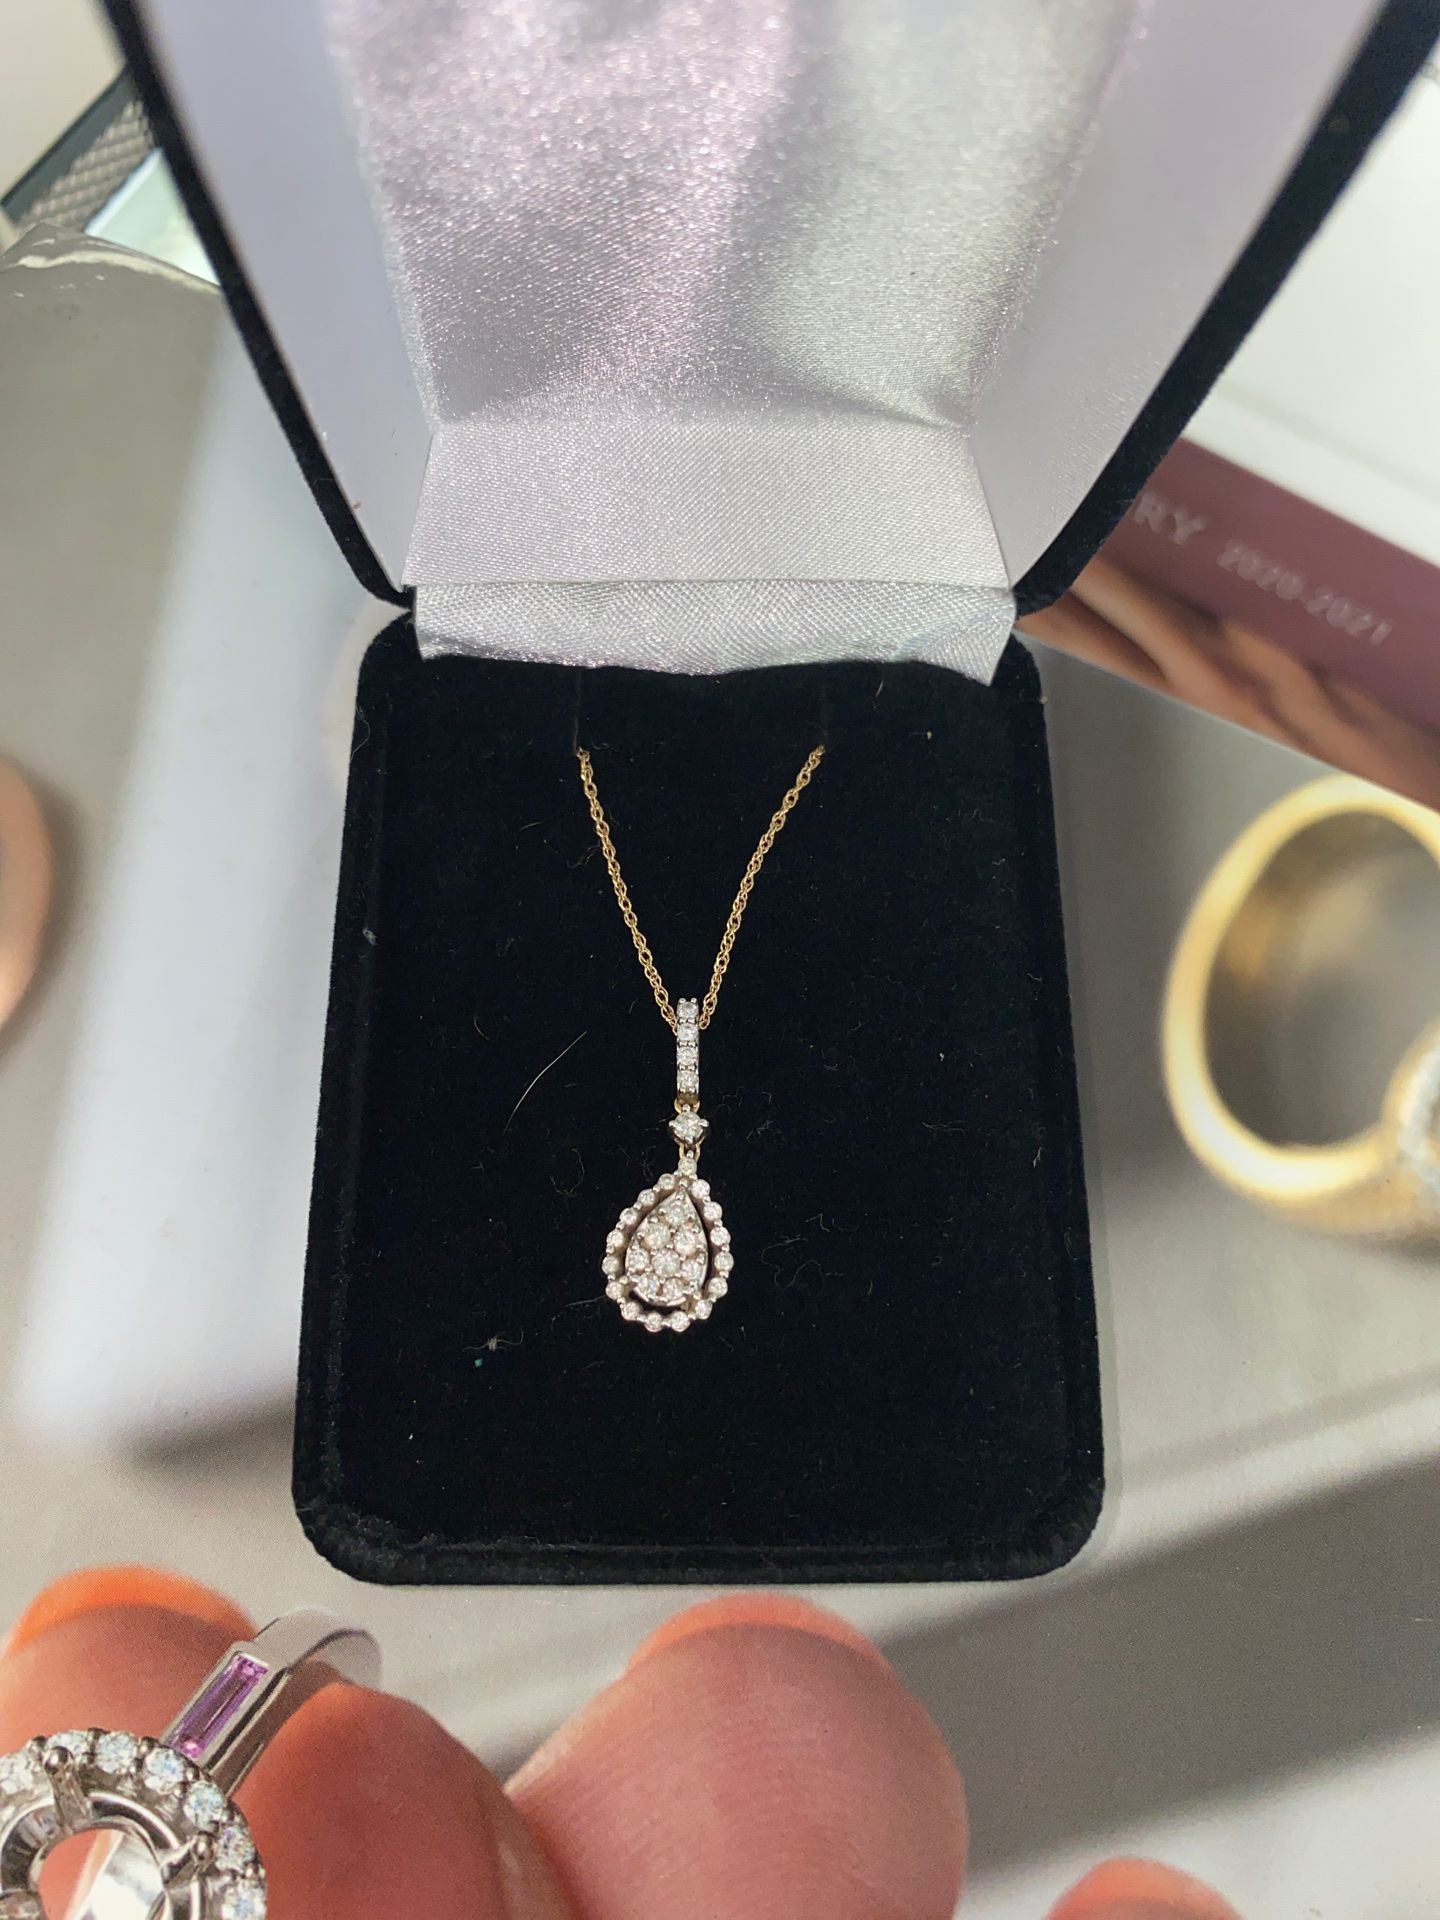 14kt diamond pendant with chain